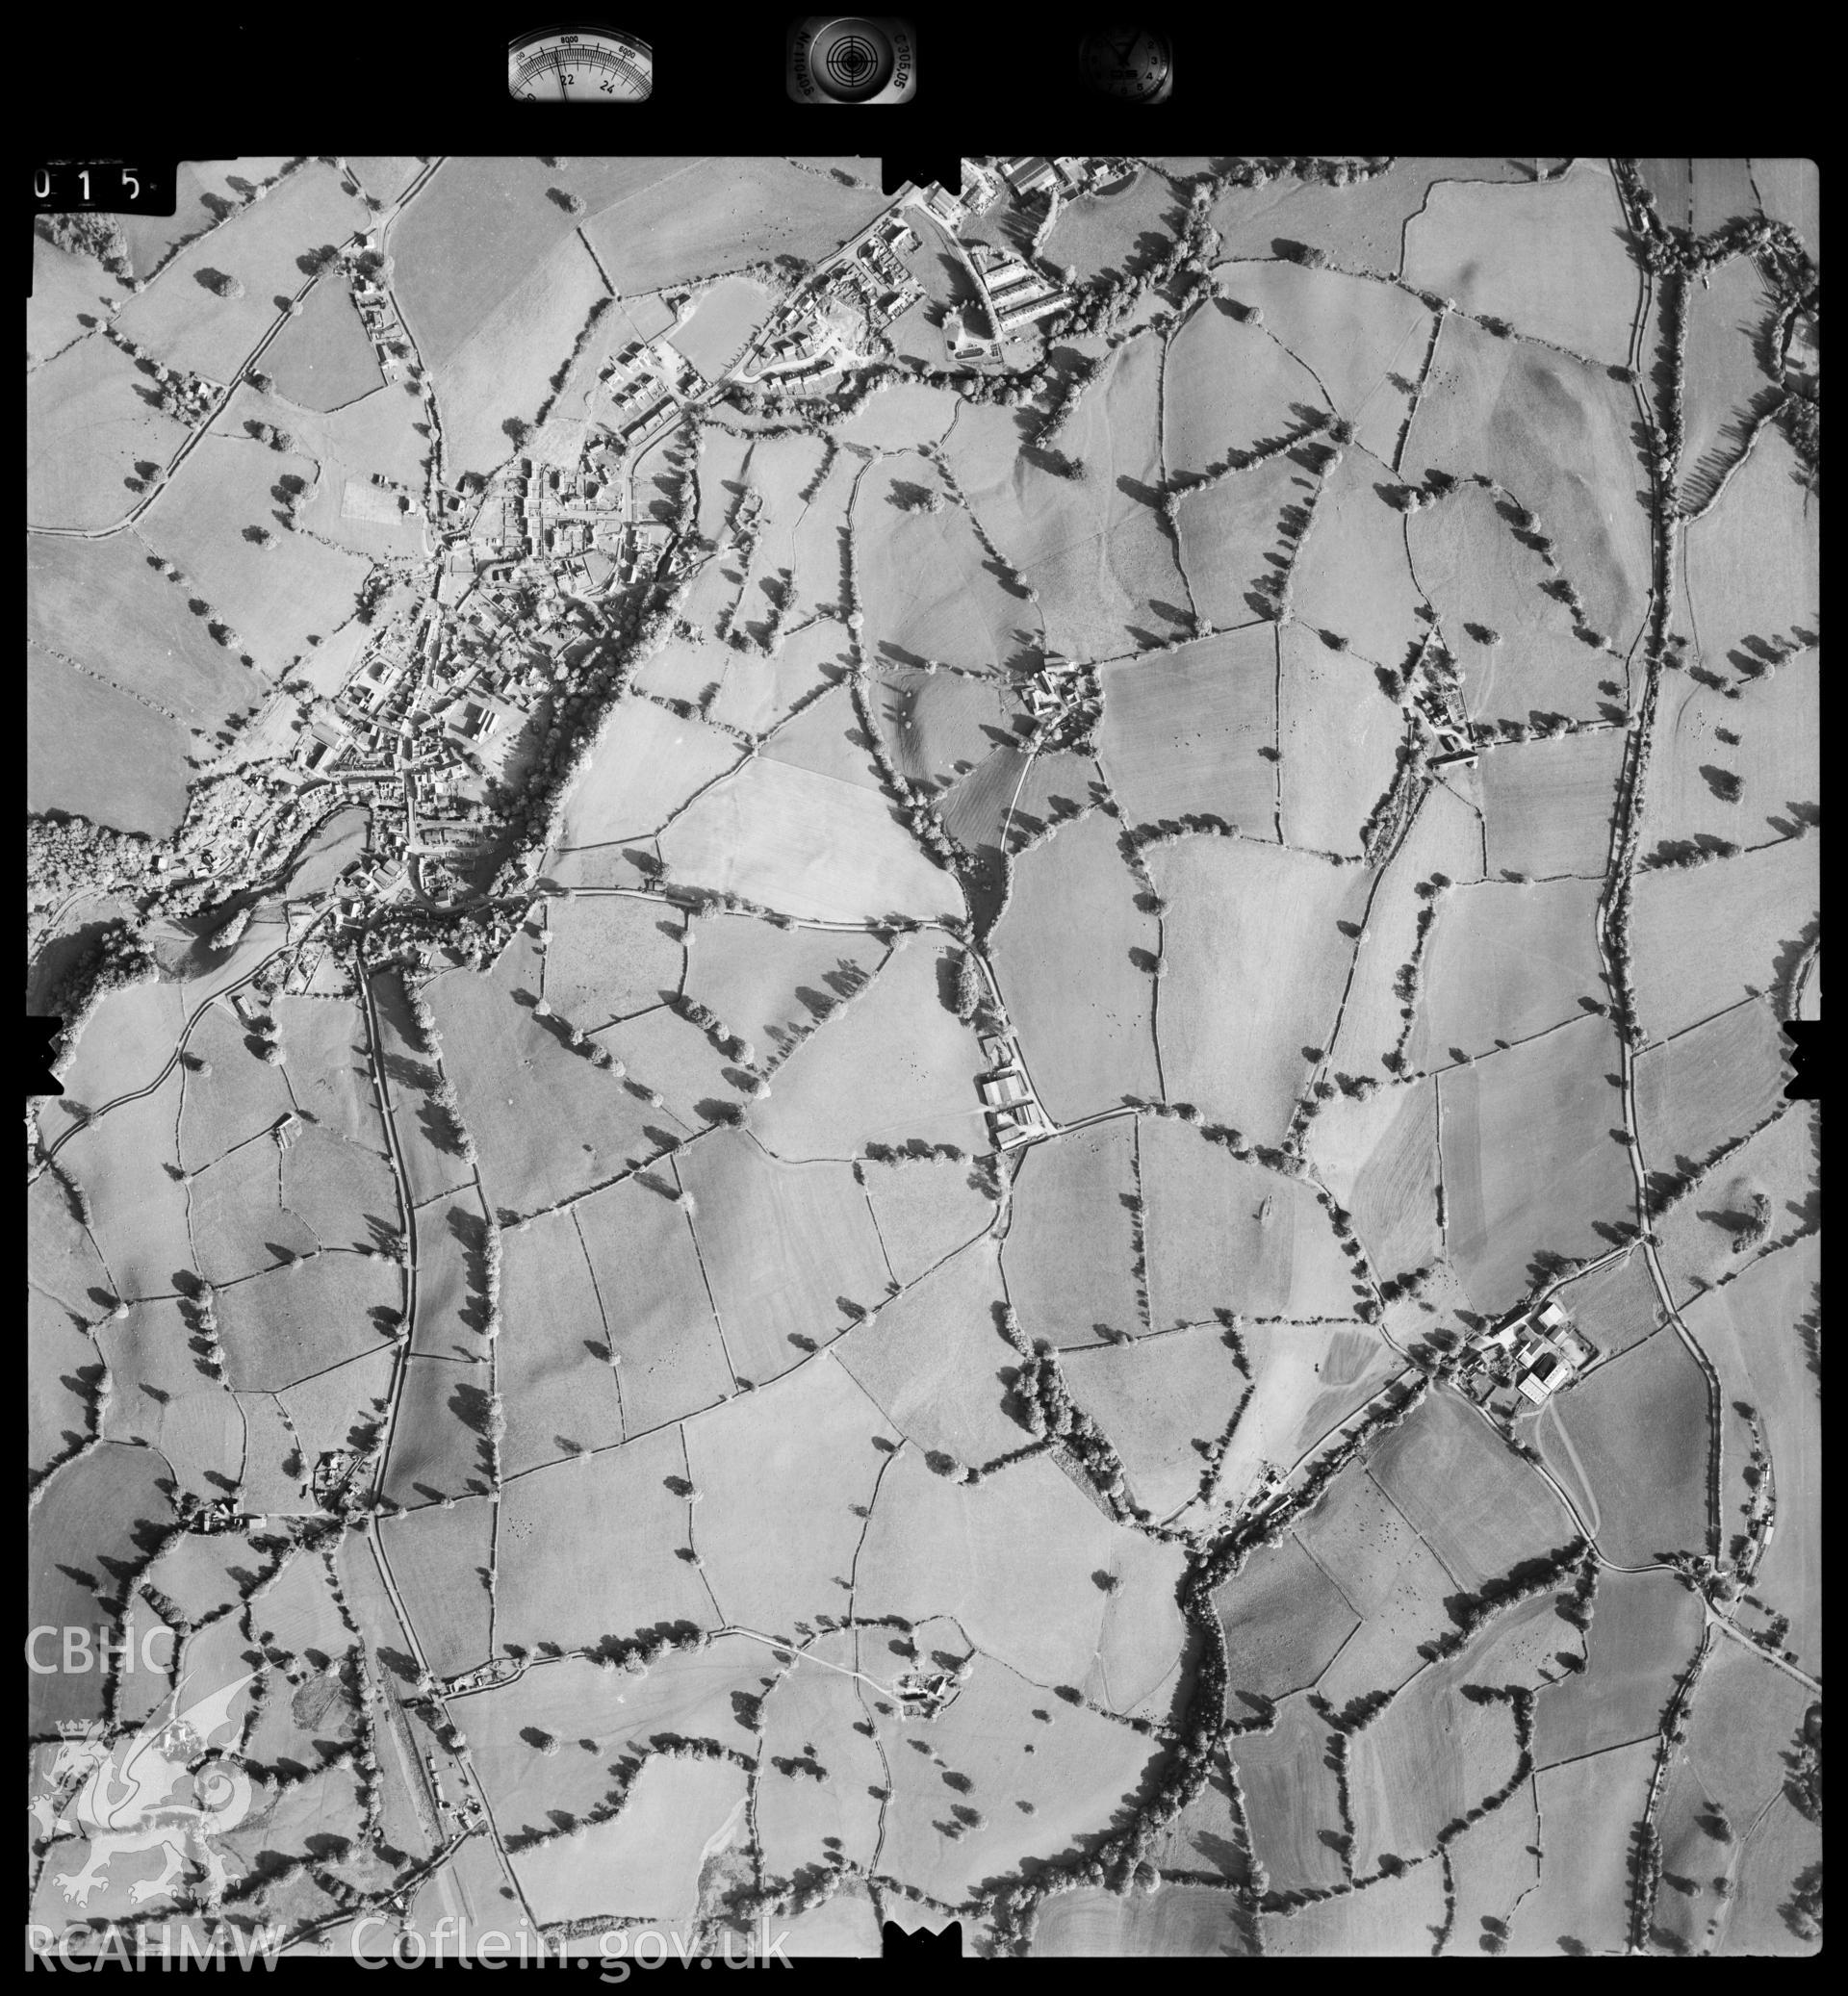 Digitized copy of an aerial photograph showing Llanrhaiadr ym Mochnant area, taken by Ordnance Survey, 1994.